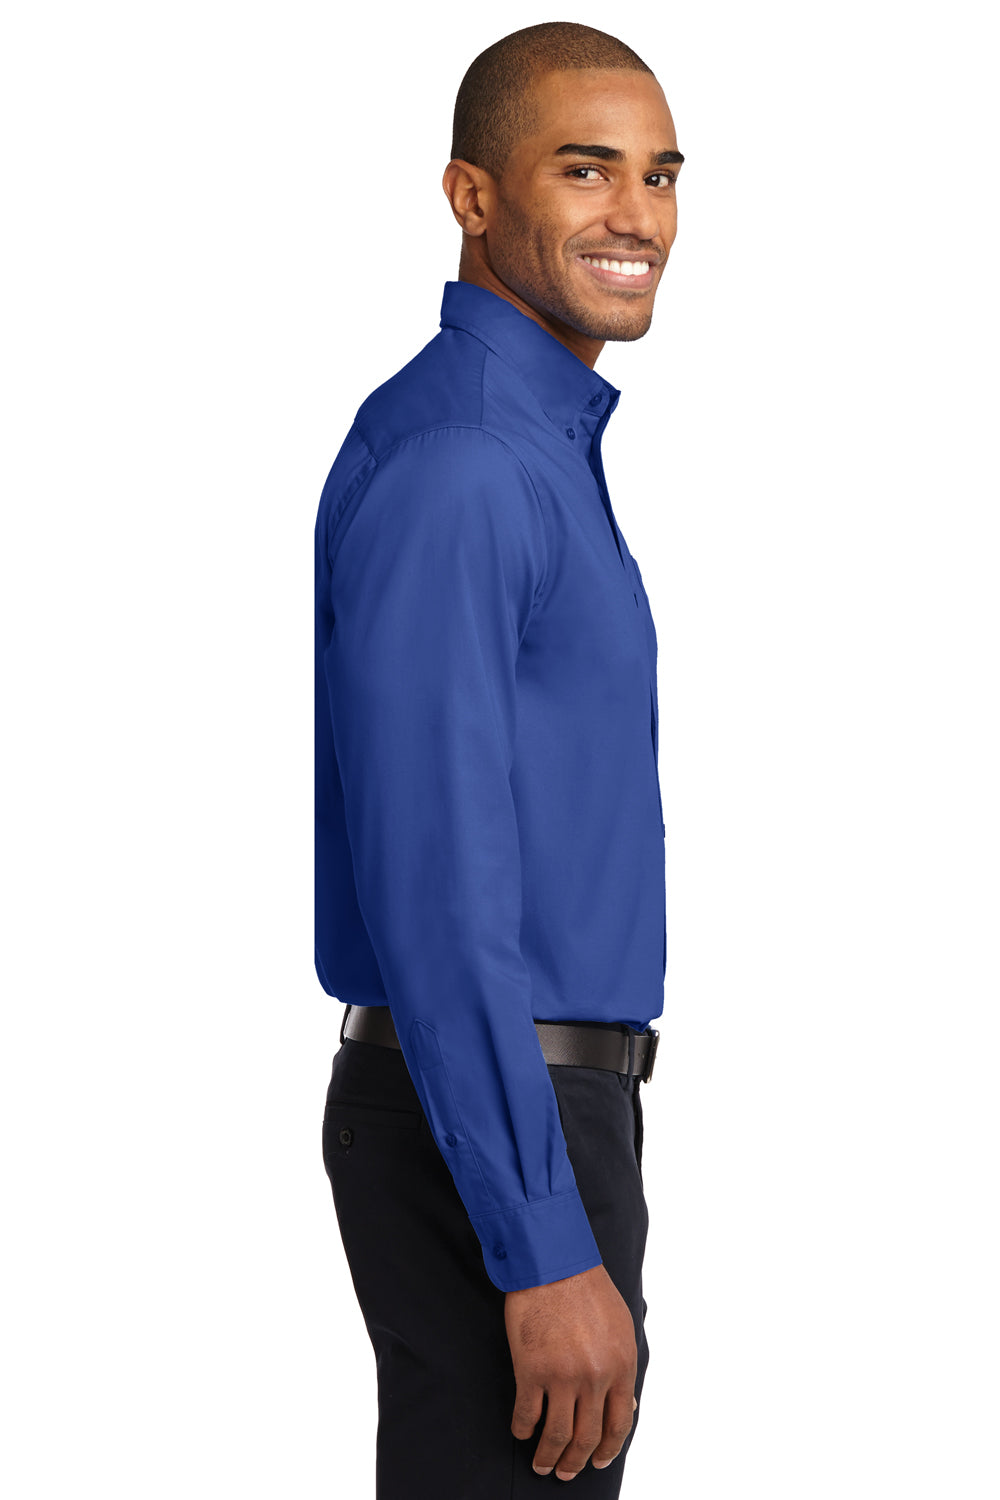 Royal Blue Long Sleeve for Men – Cutton Garments